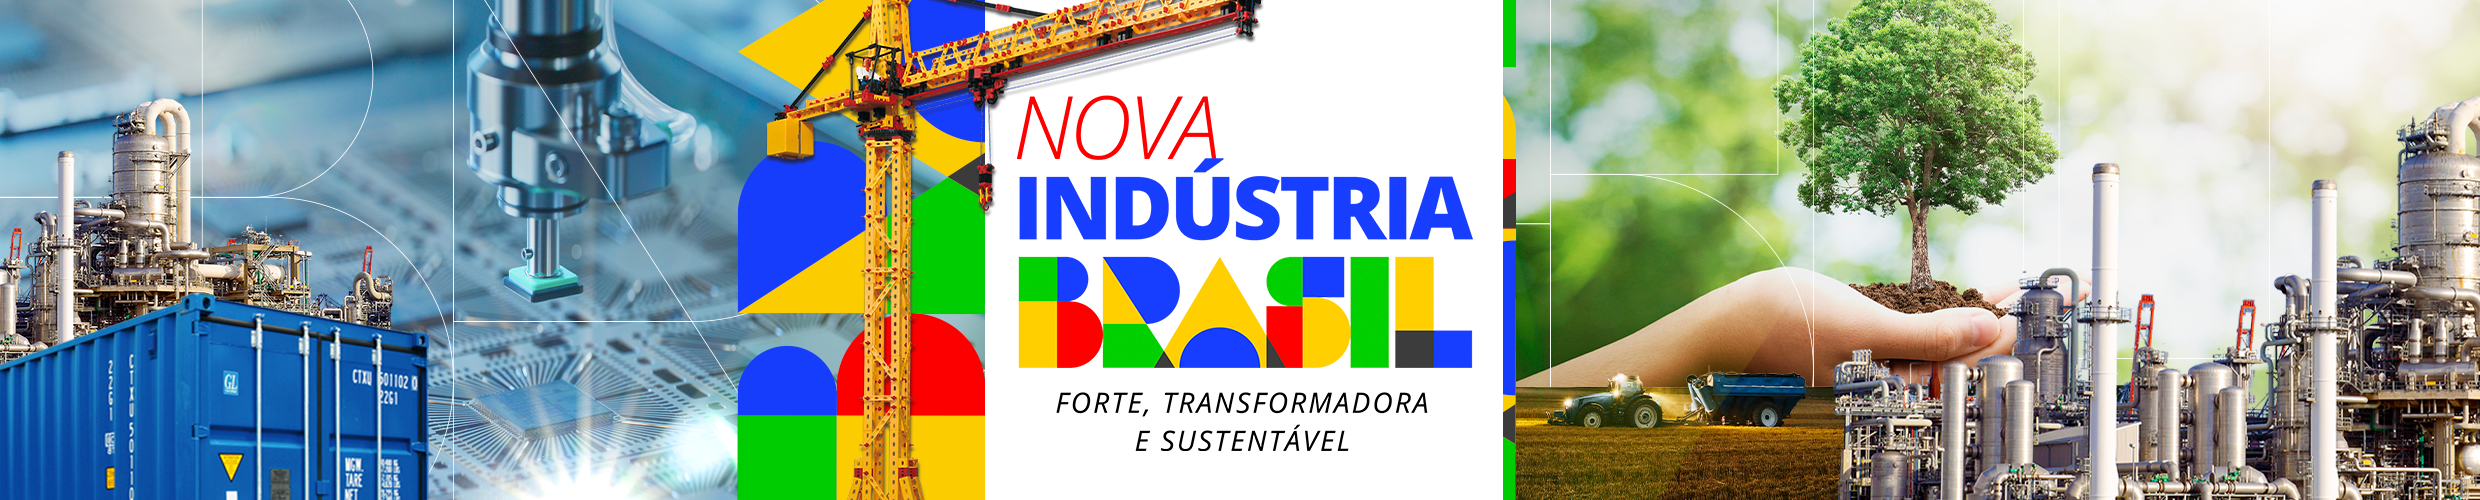 Nova Indústria Brasil (NIB)